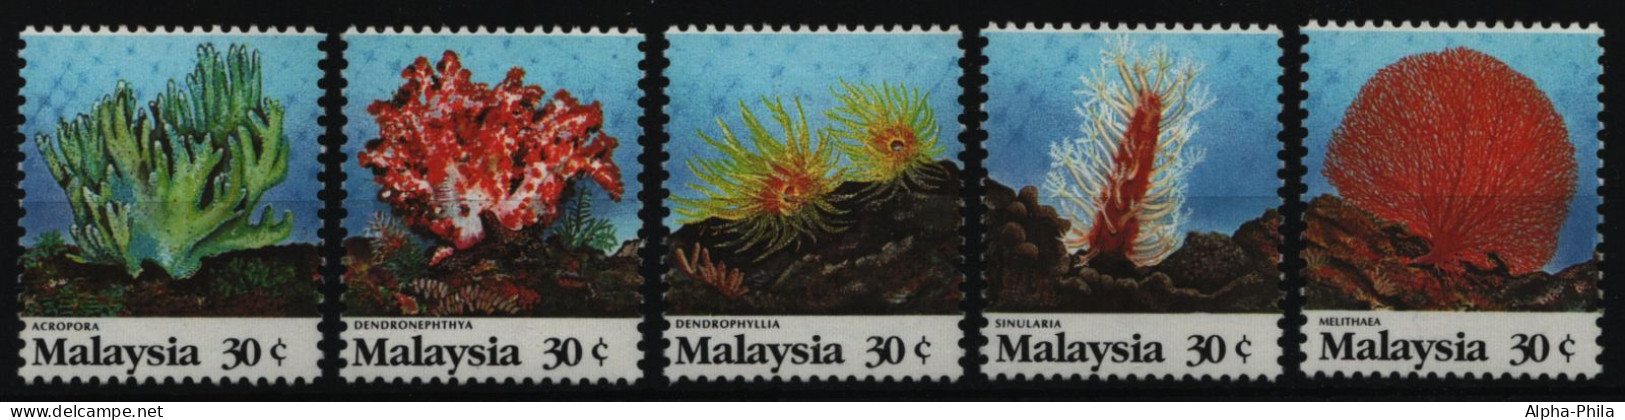 Malaysia 1992 - Mi-Nr. 475-479 ** - MNH - Korallen / Corals - Malaysia (1964-...)